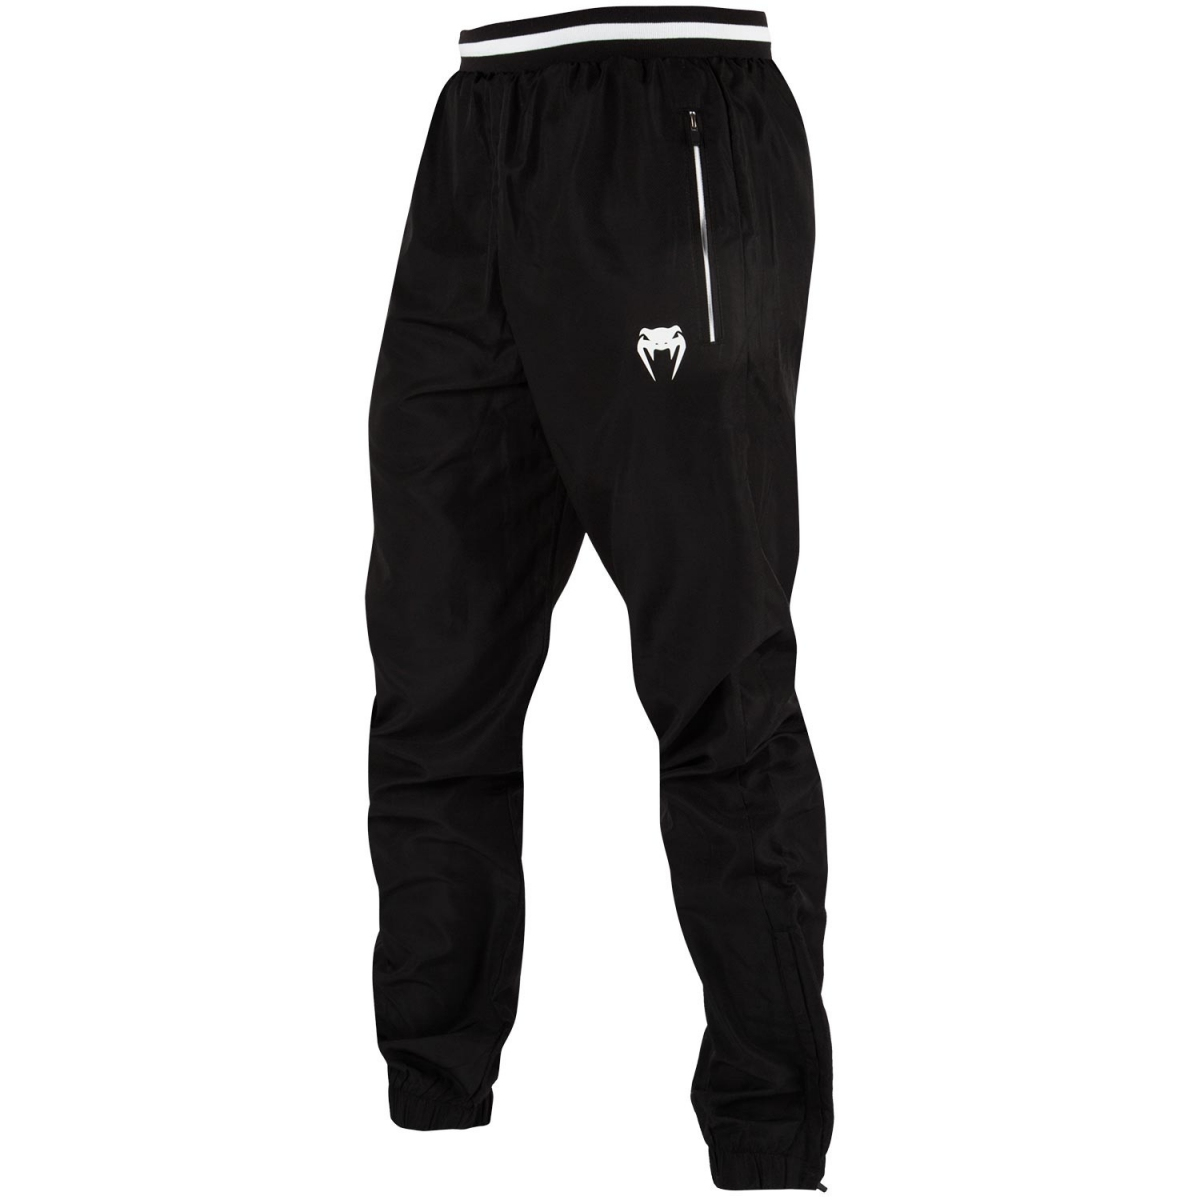 Спортивные штаны Venum Club Joggings Black